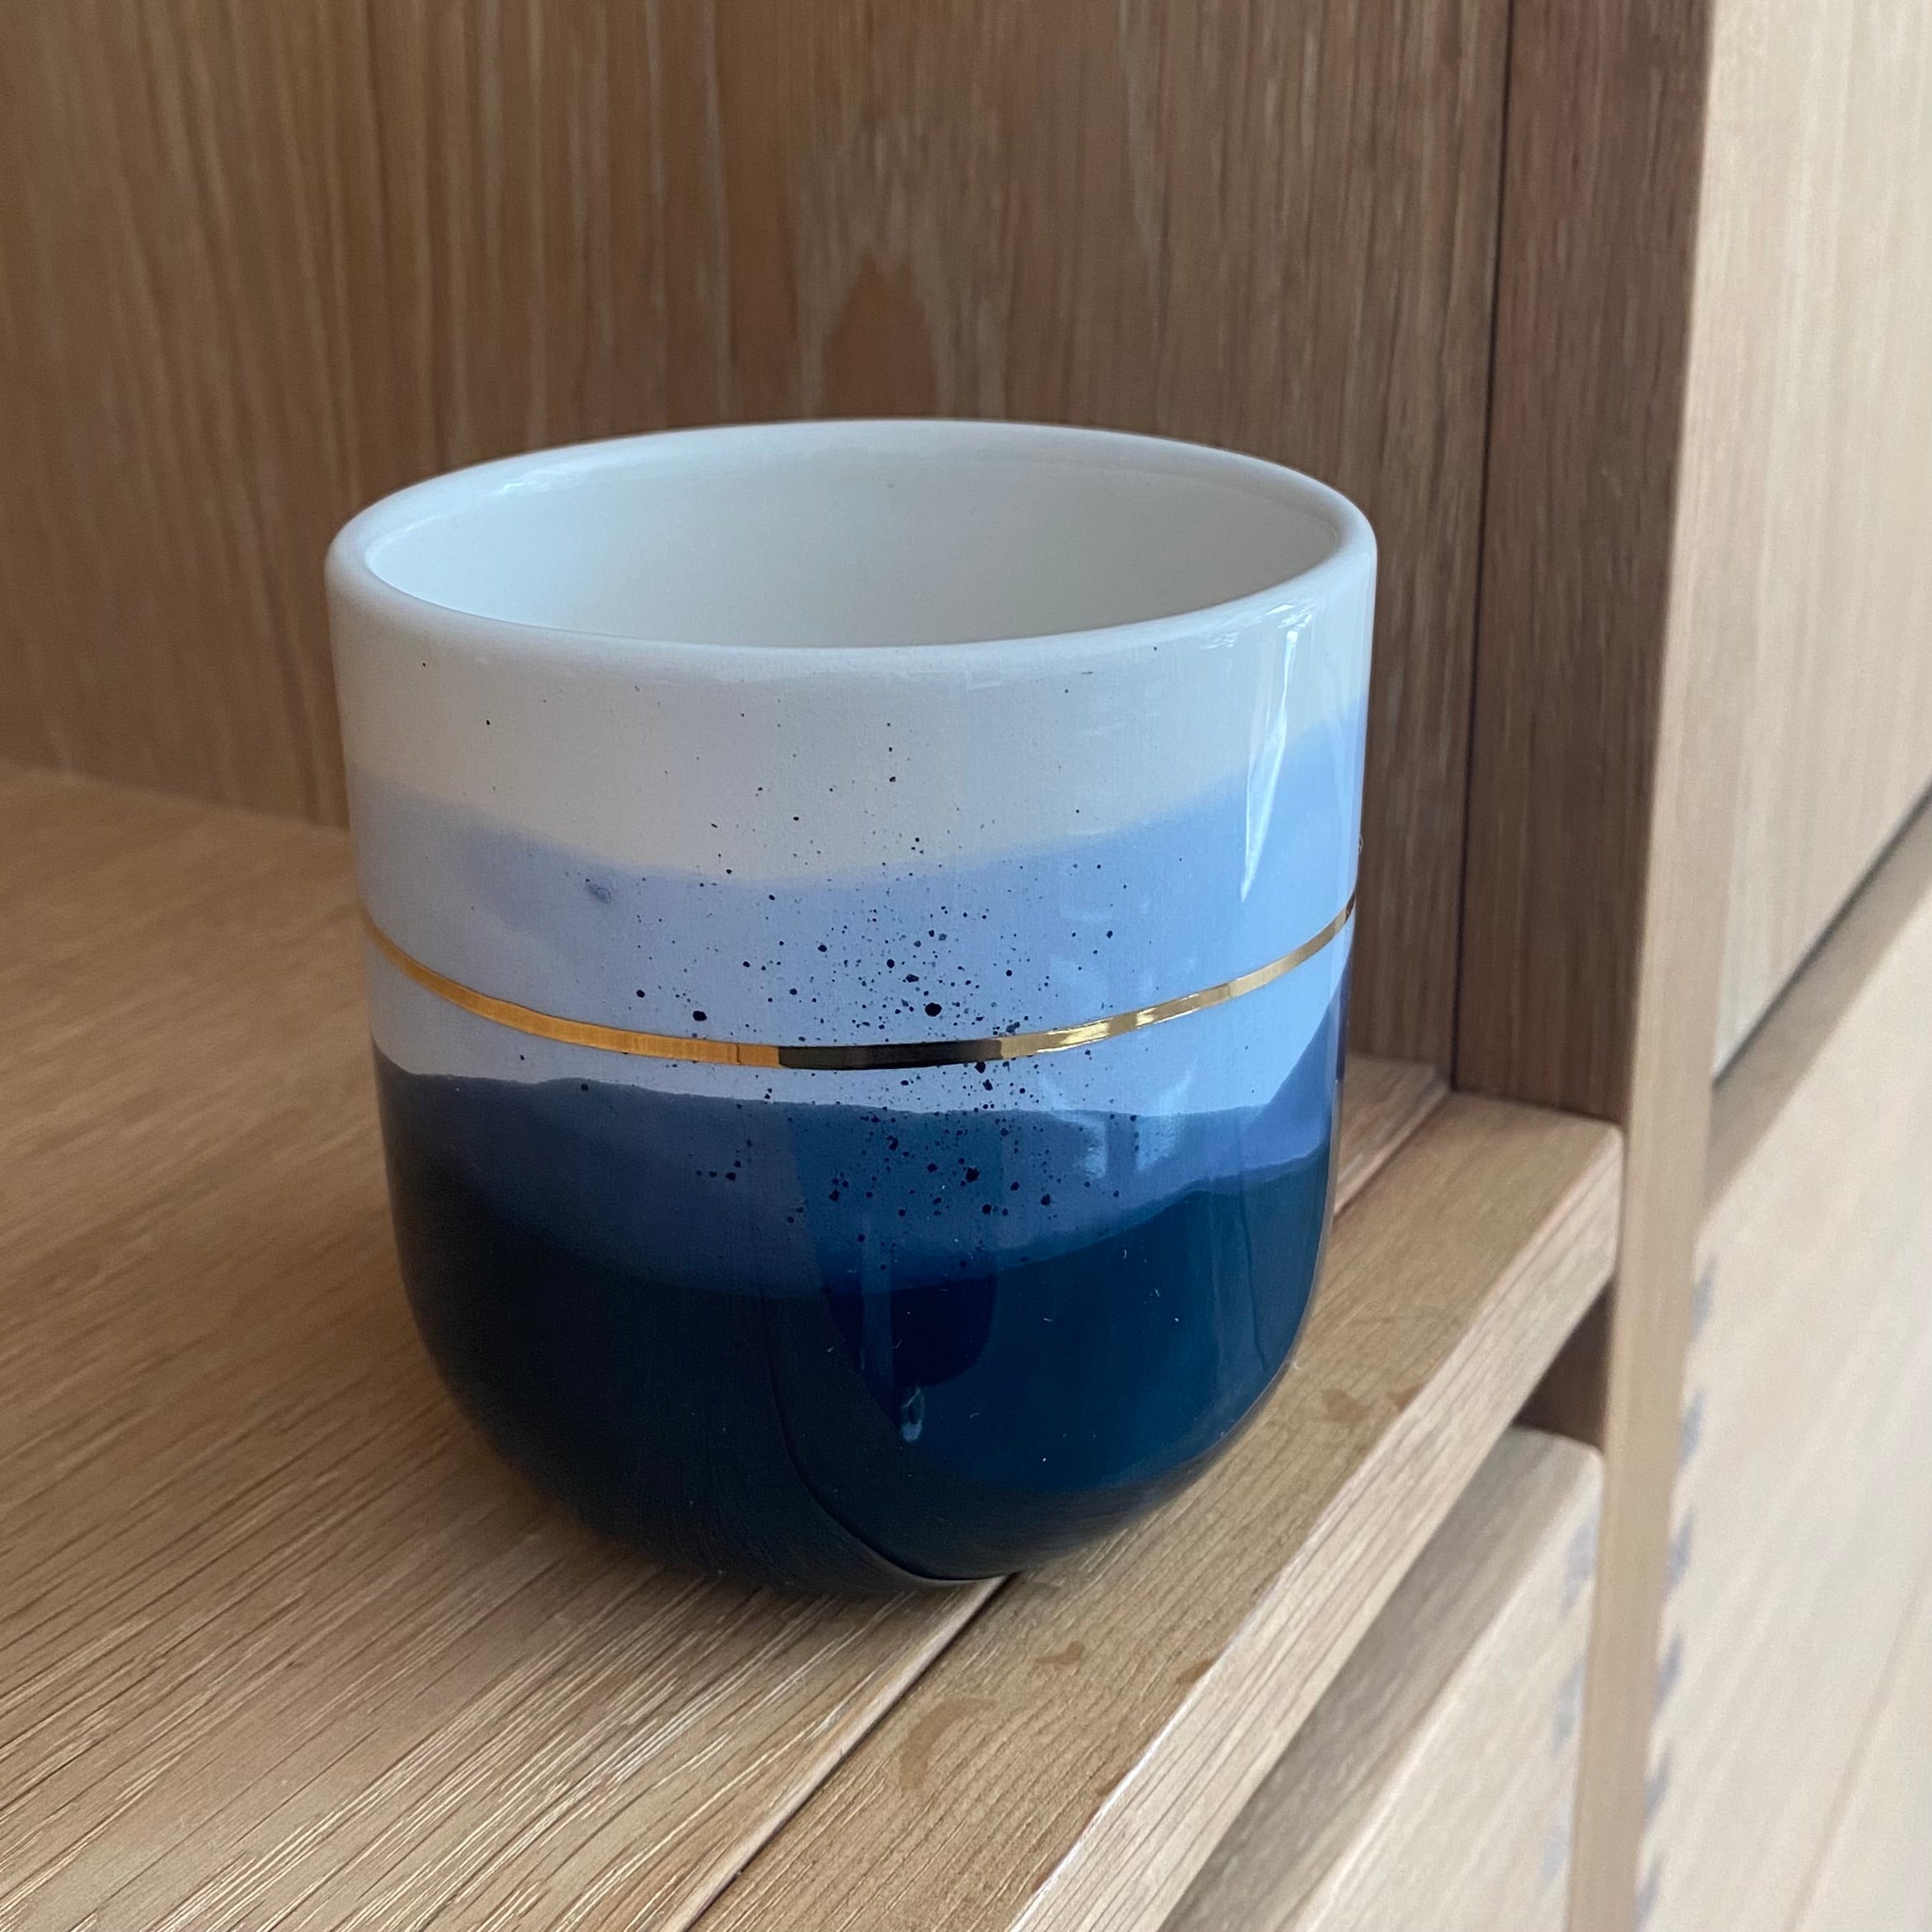 Marinski Heartmades latte kop Landscape - dark blue, light celestial blue